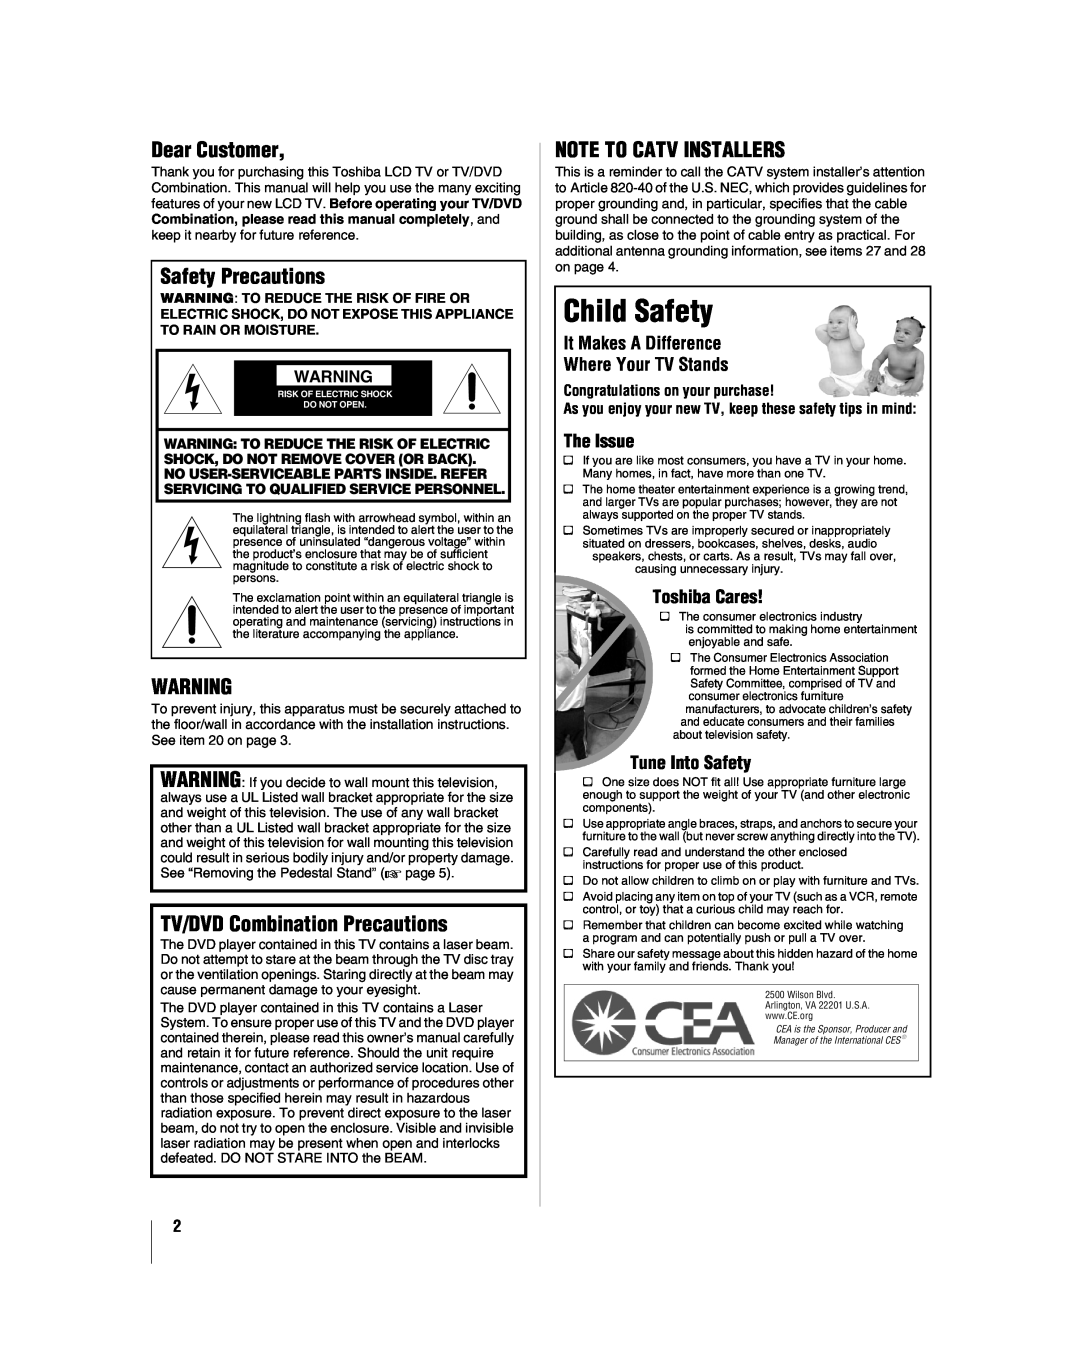 Toshiba 32LV37 manual Dear Customer, Safety Precautions, TV/DVD Combination Precautions, Note To Catv Installers, The Issue 